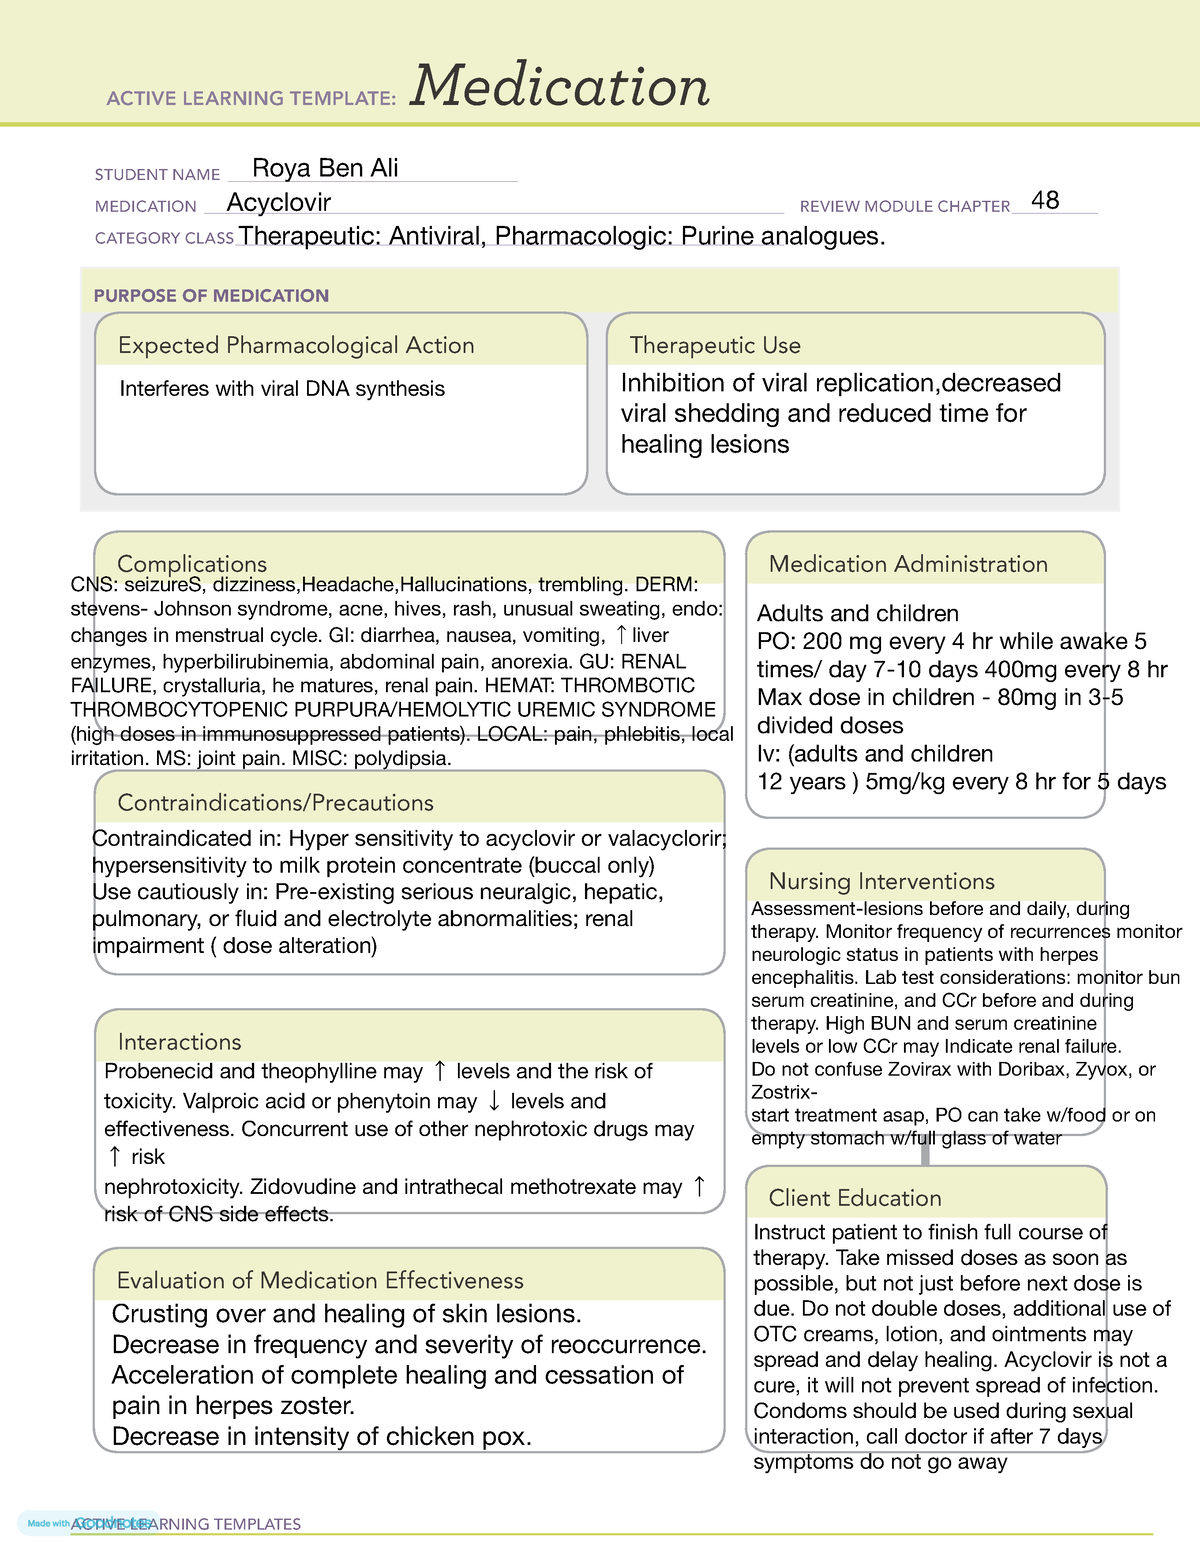 Acyclovir medication template. ACTIVE LEARNING TEMPLATES Medication